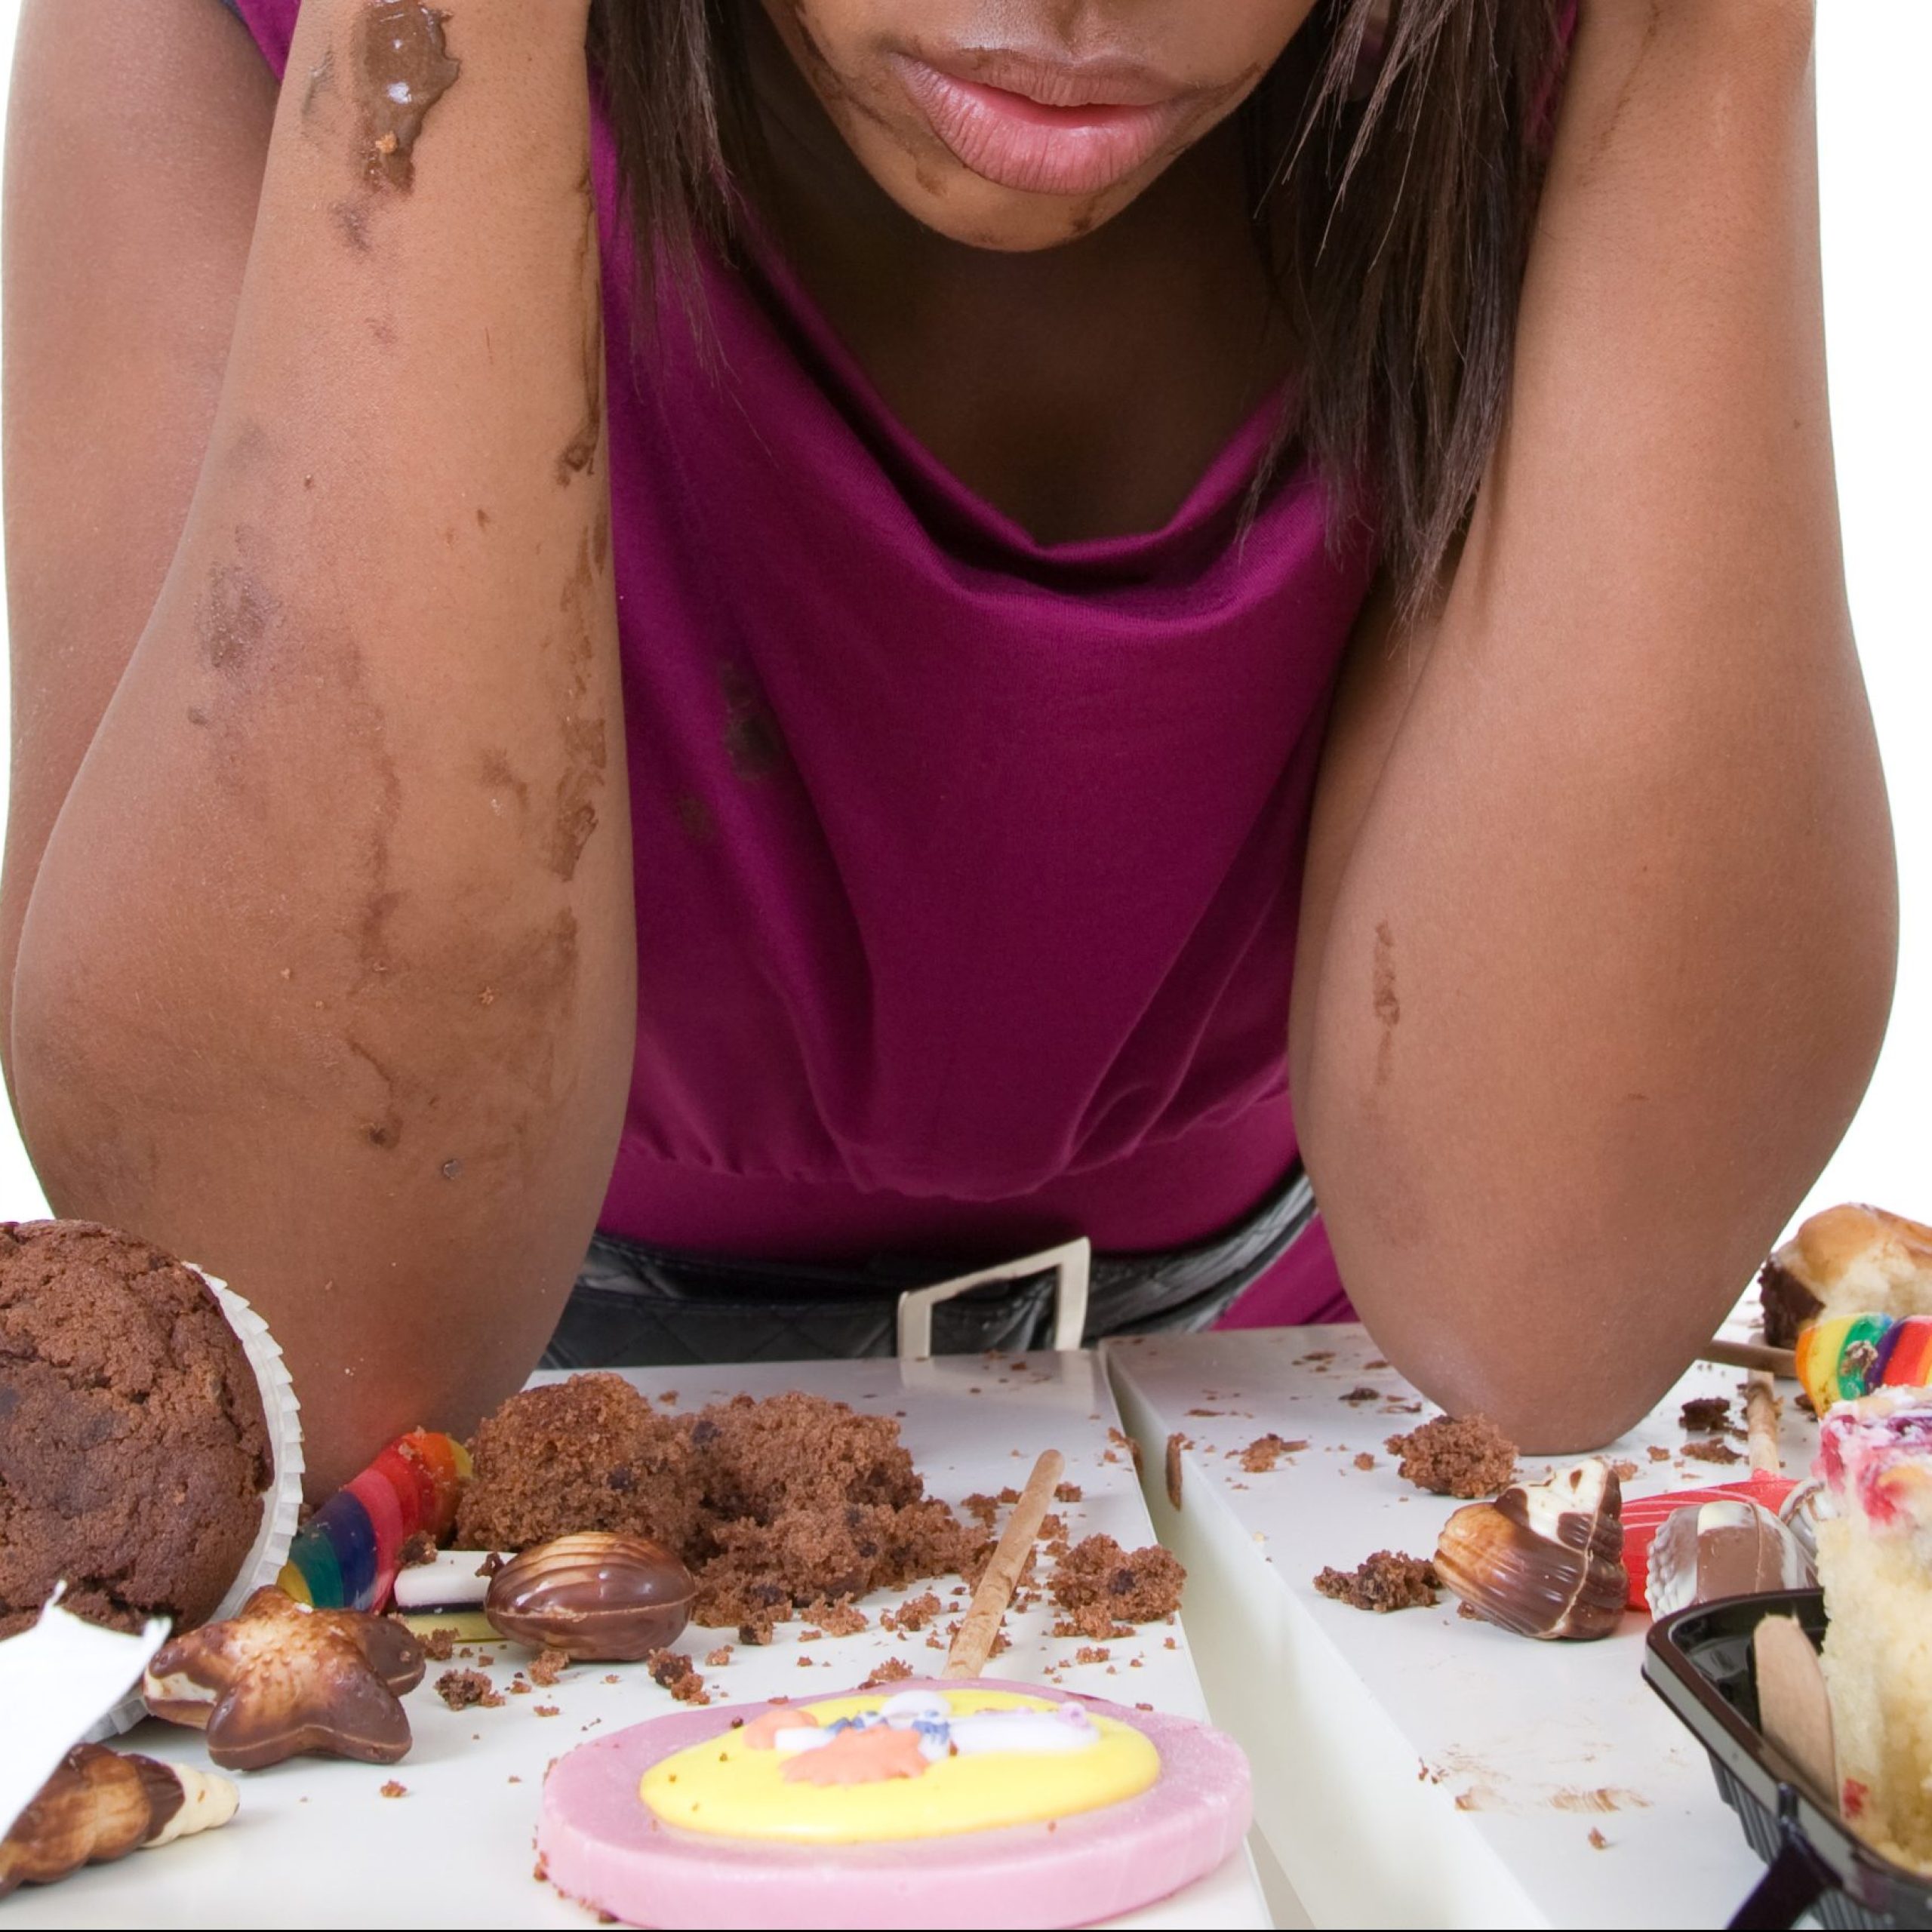 اضطراب نهم الطعام "Binge eating disorder